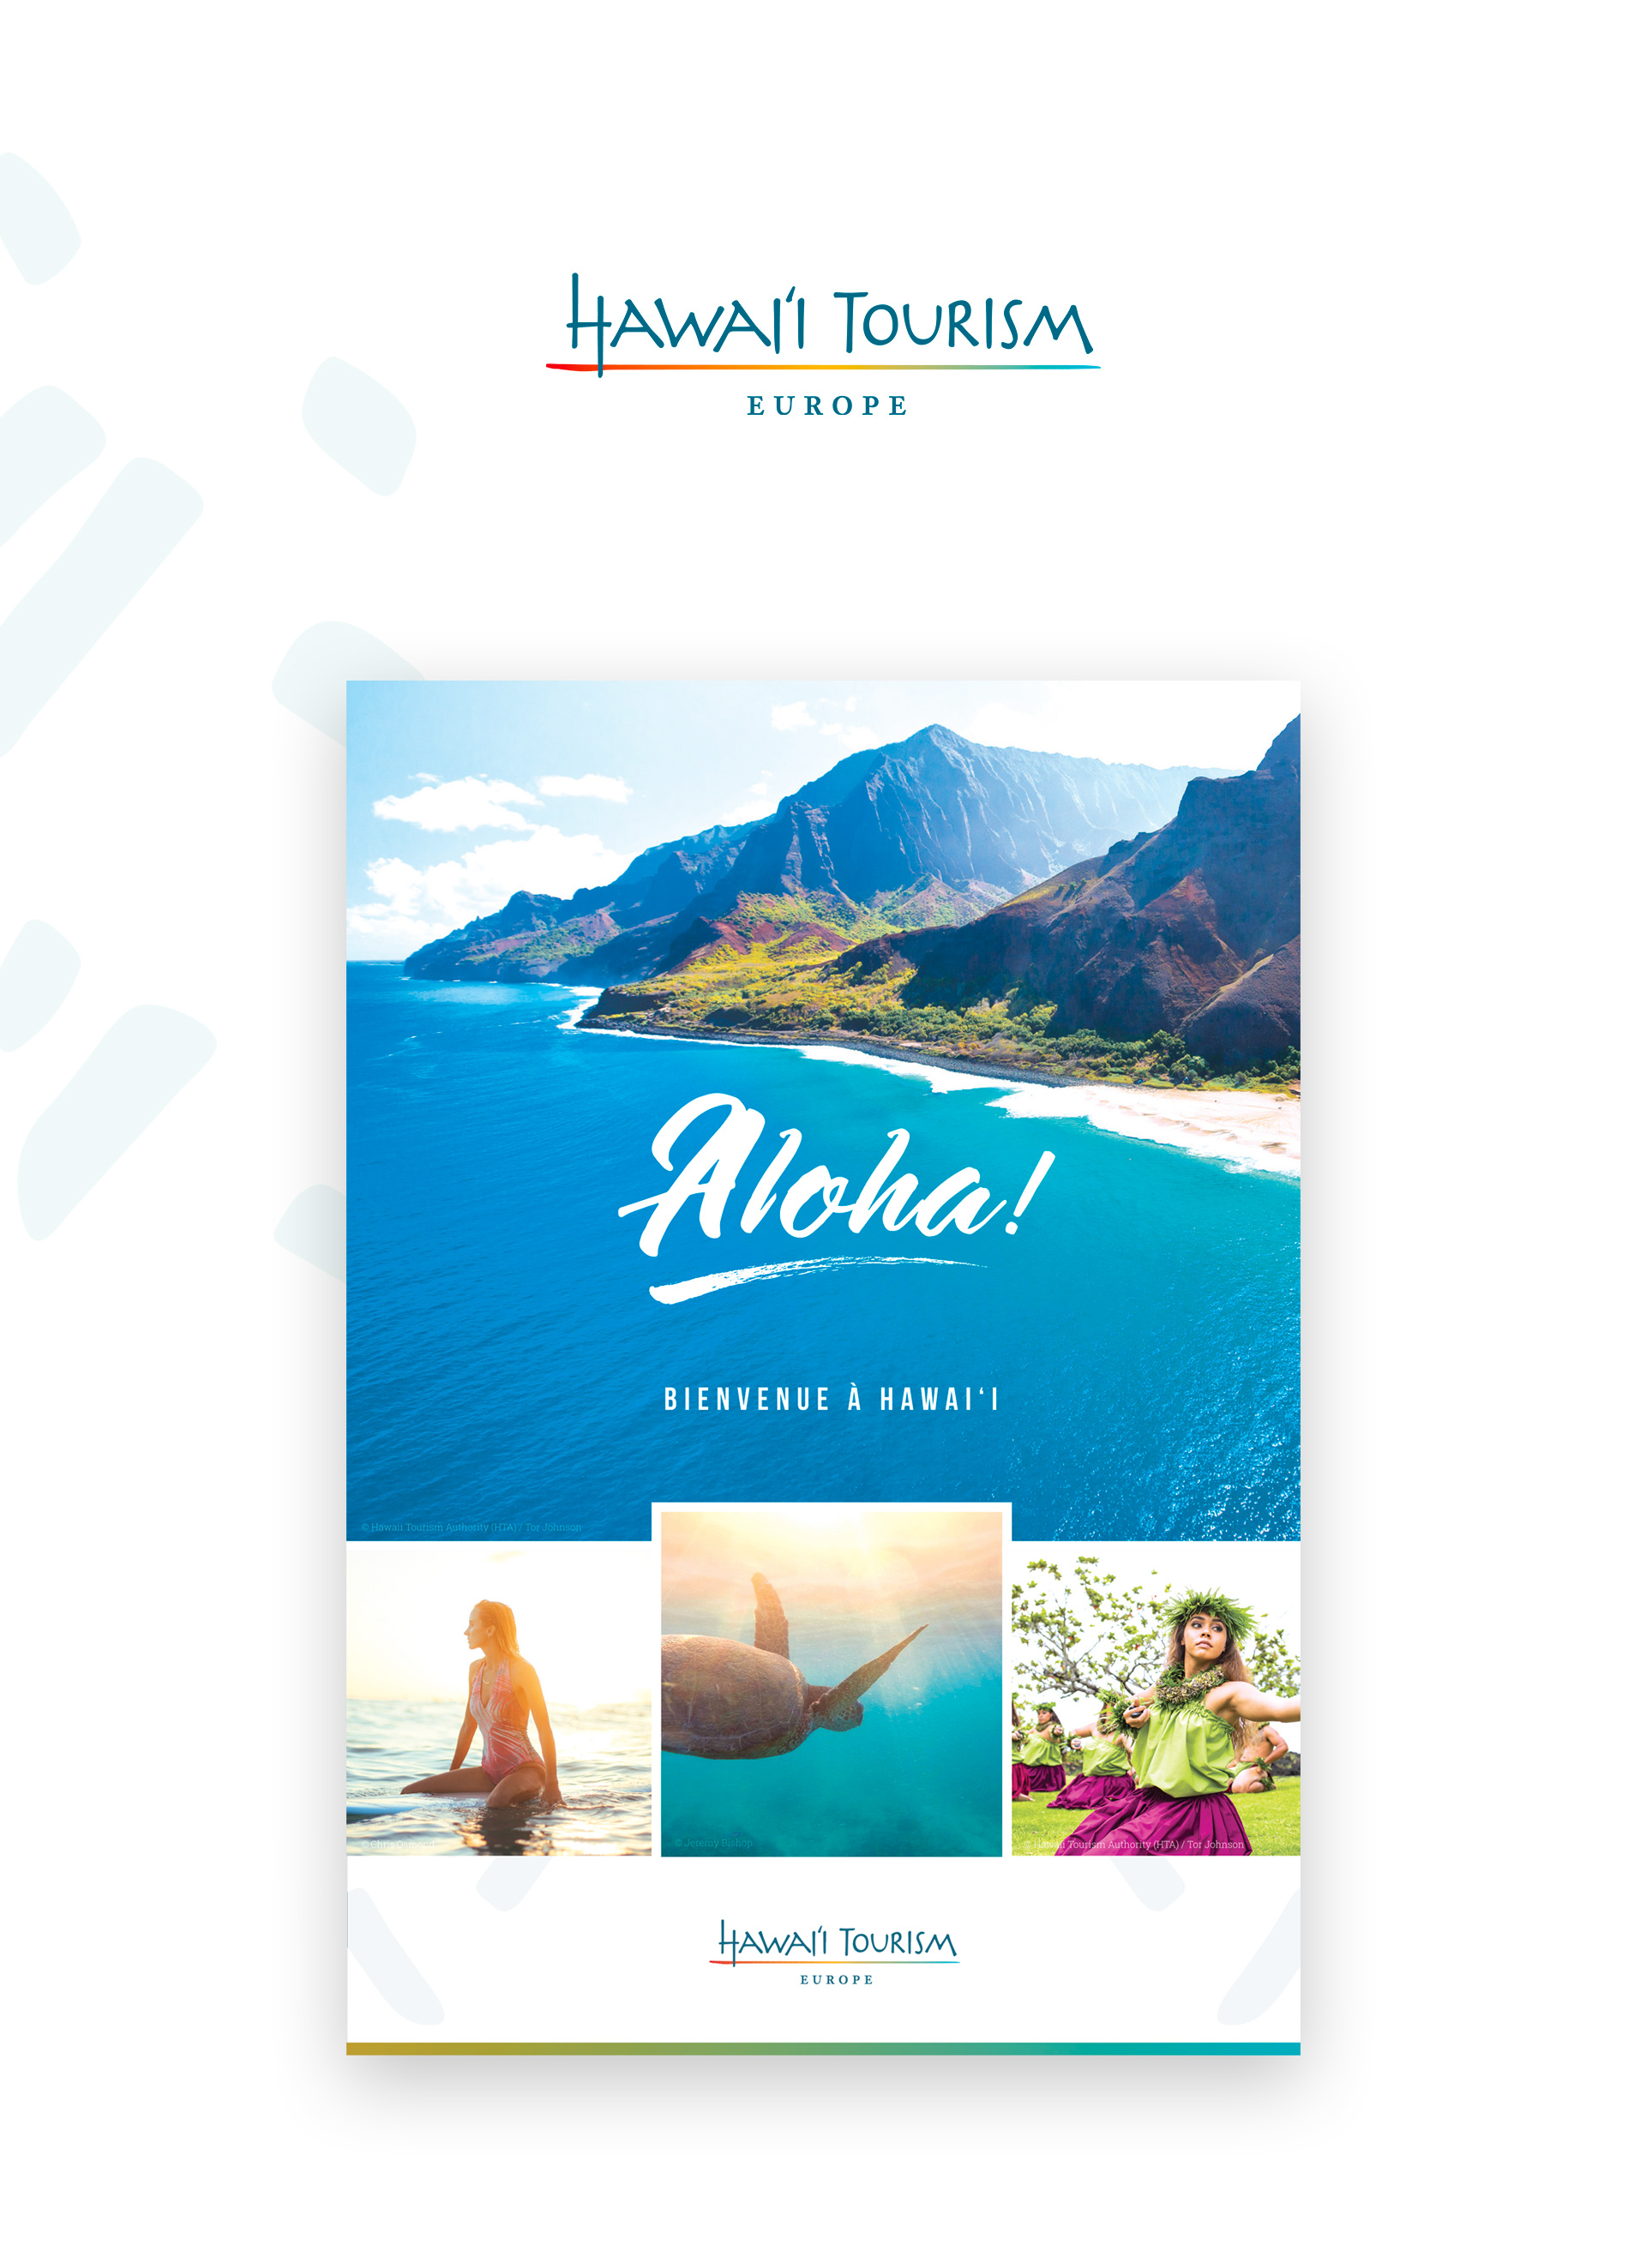 Hawaii Tourism brochure